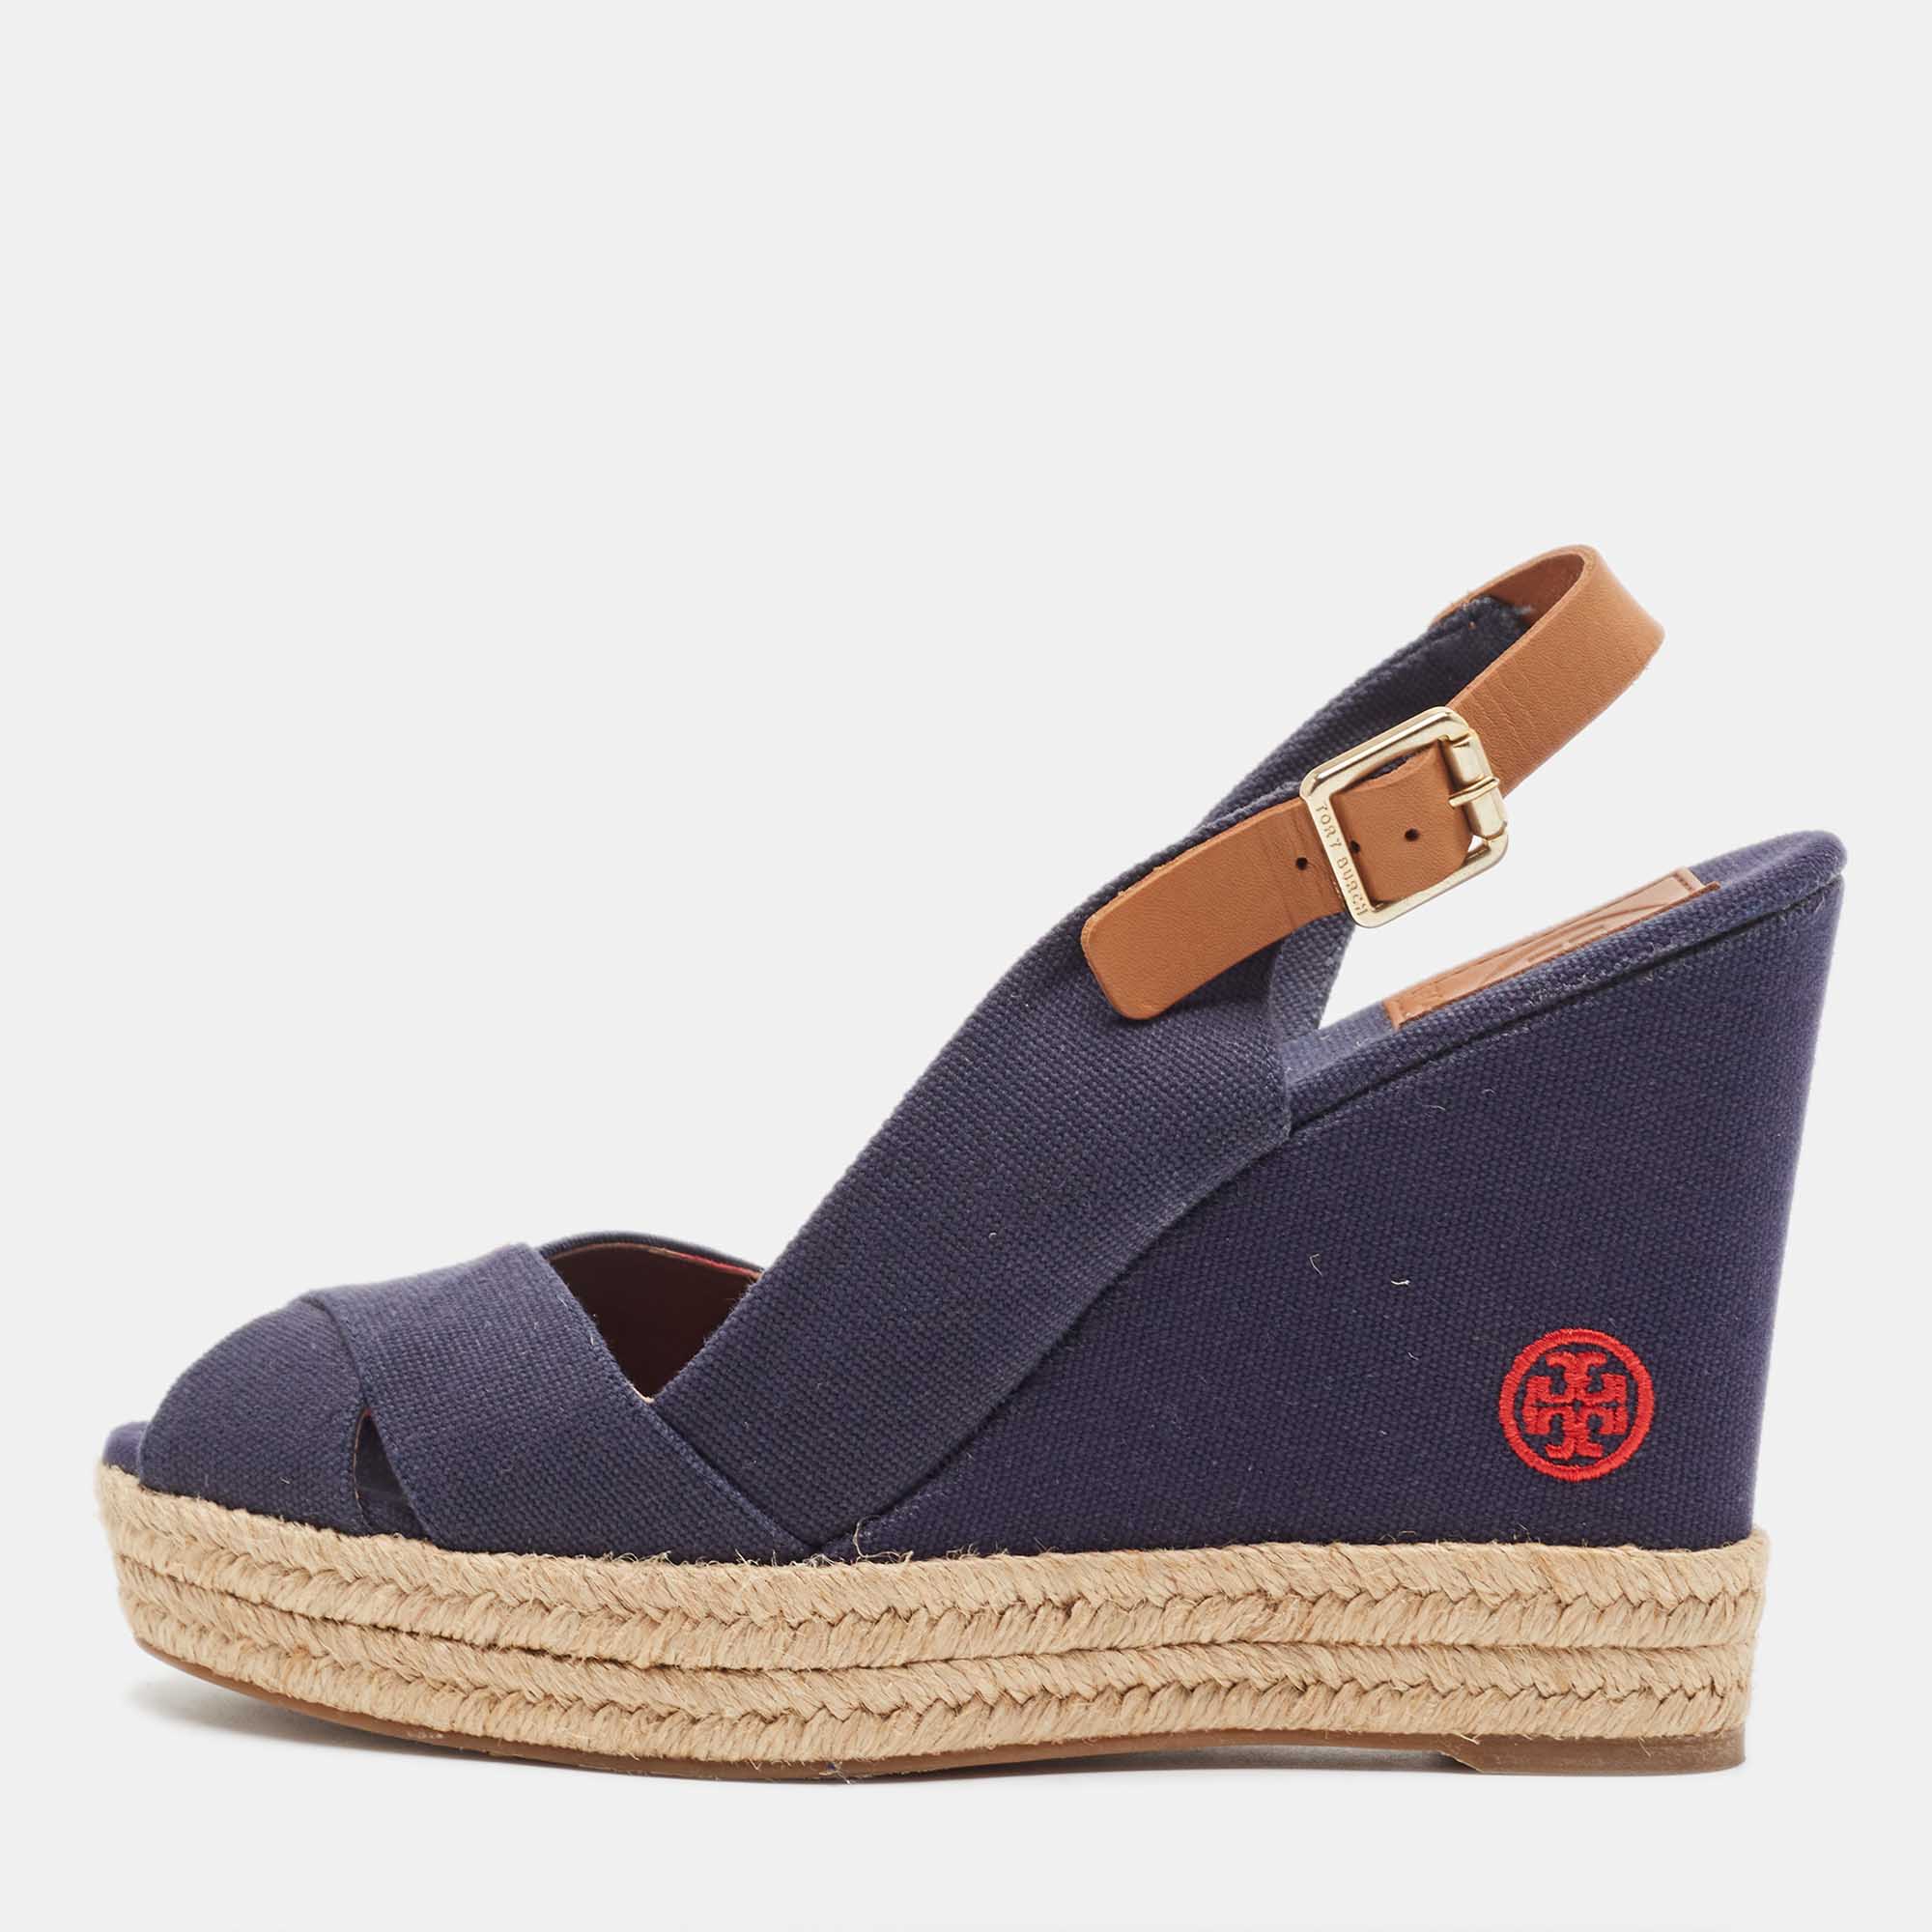 Tory burch navy blue denim espadrille wedge sandals size 38.5